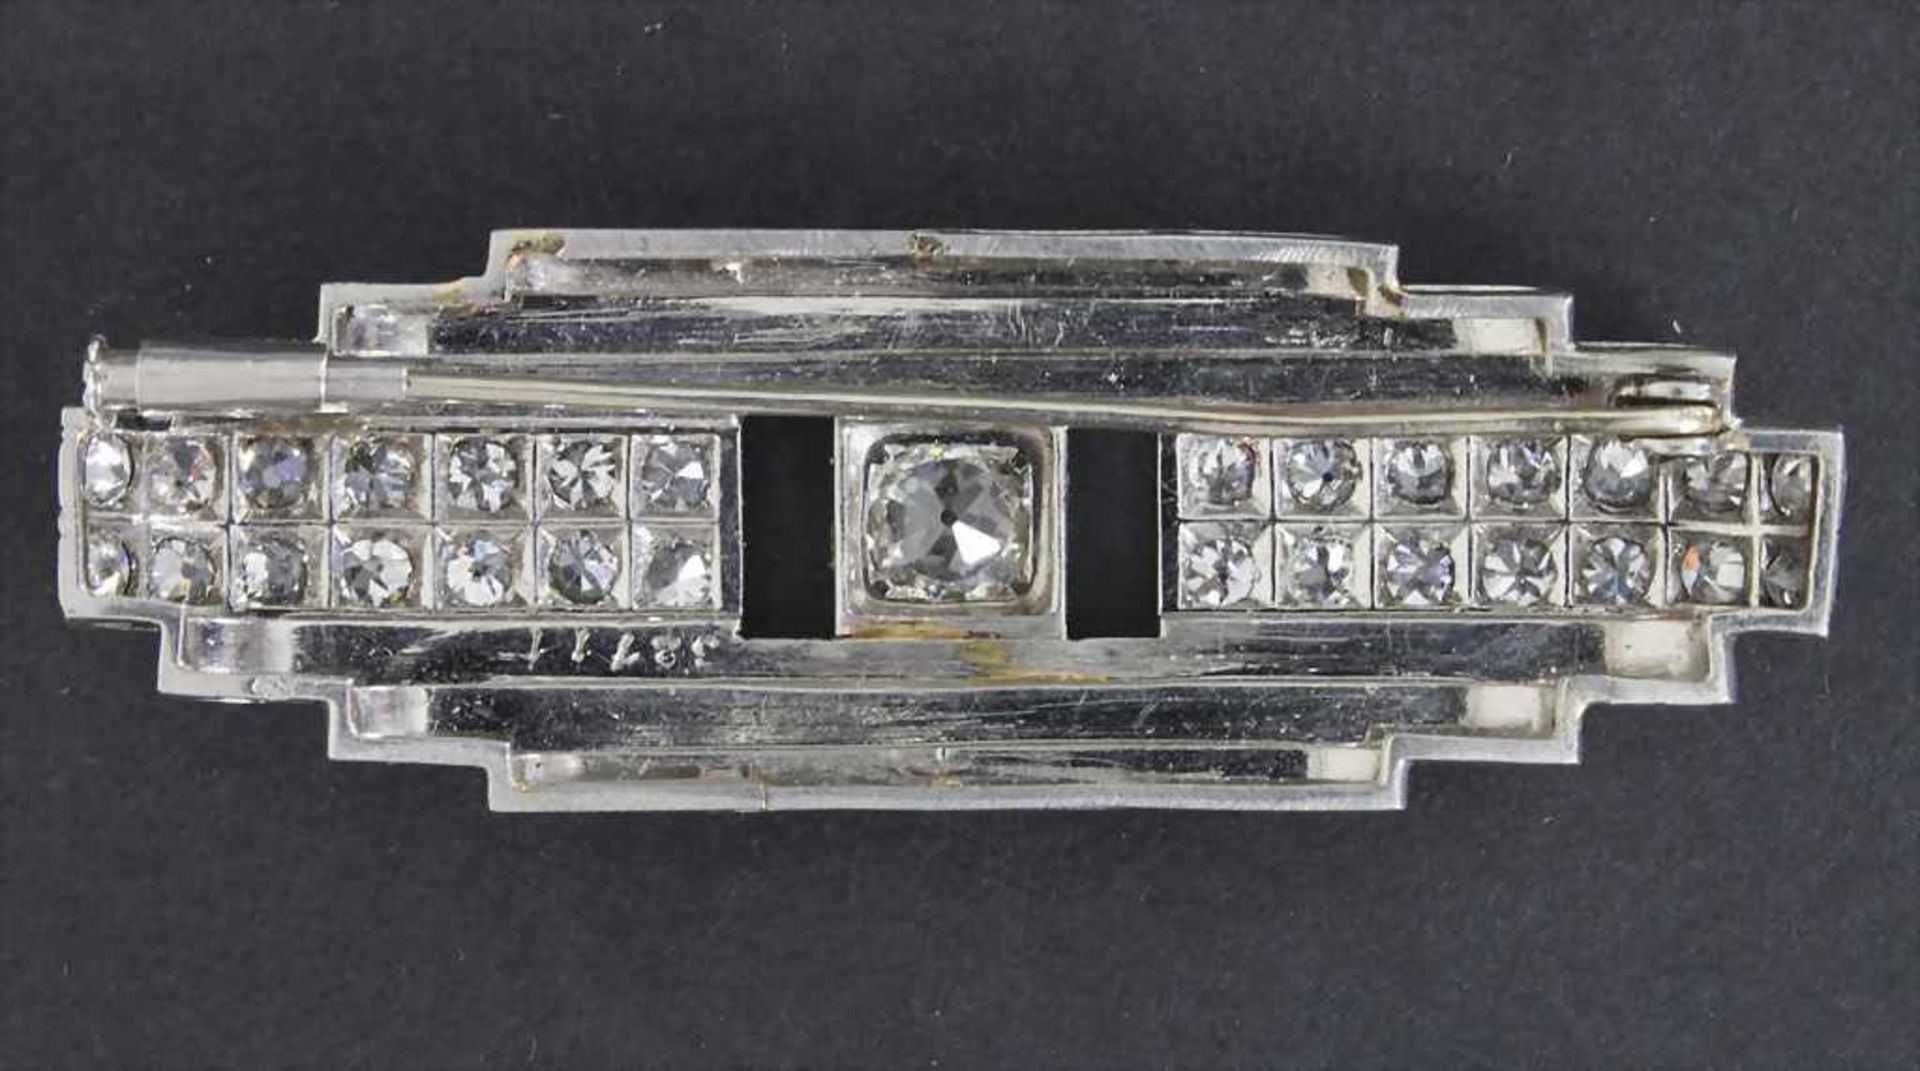 Art Déco Brosche mit Diamanten / Brooch with Diamonds, Paris, um 1920< - Image 2 of 2